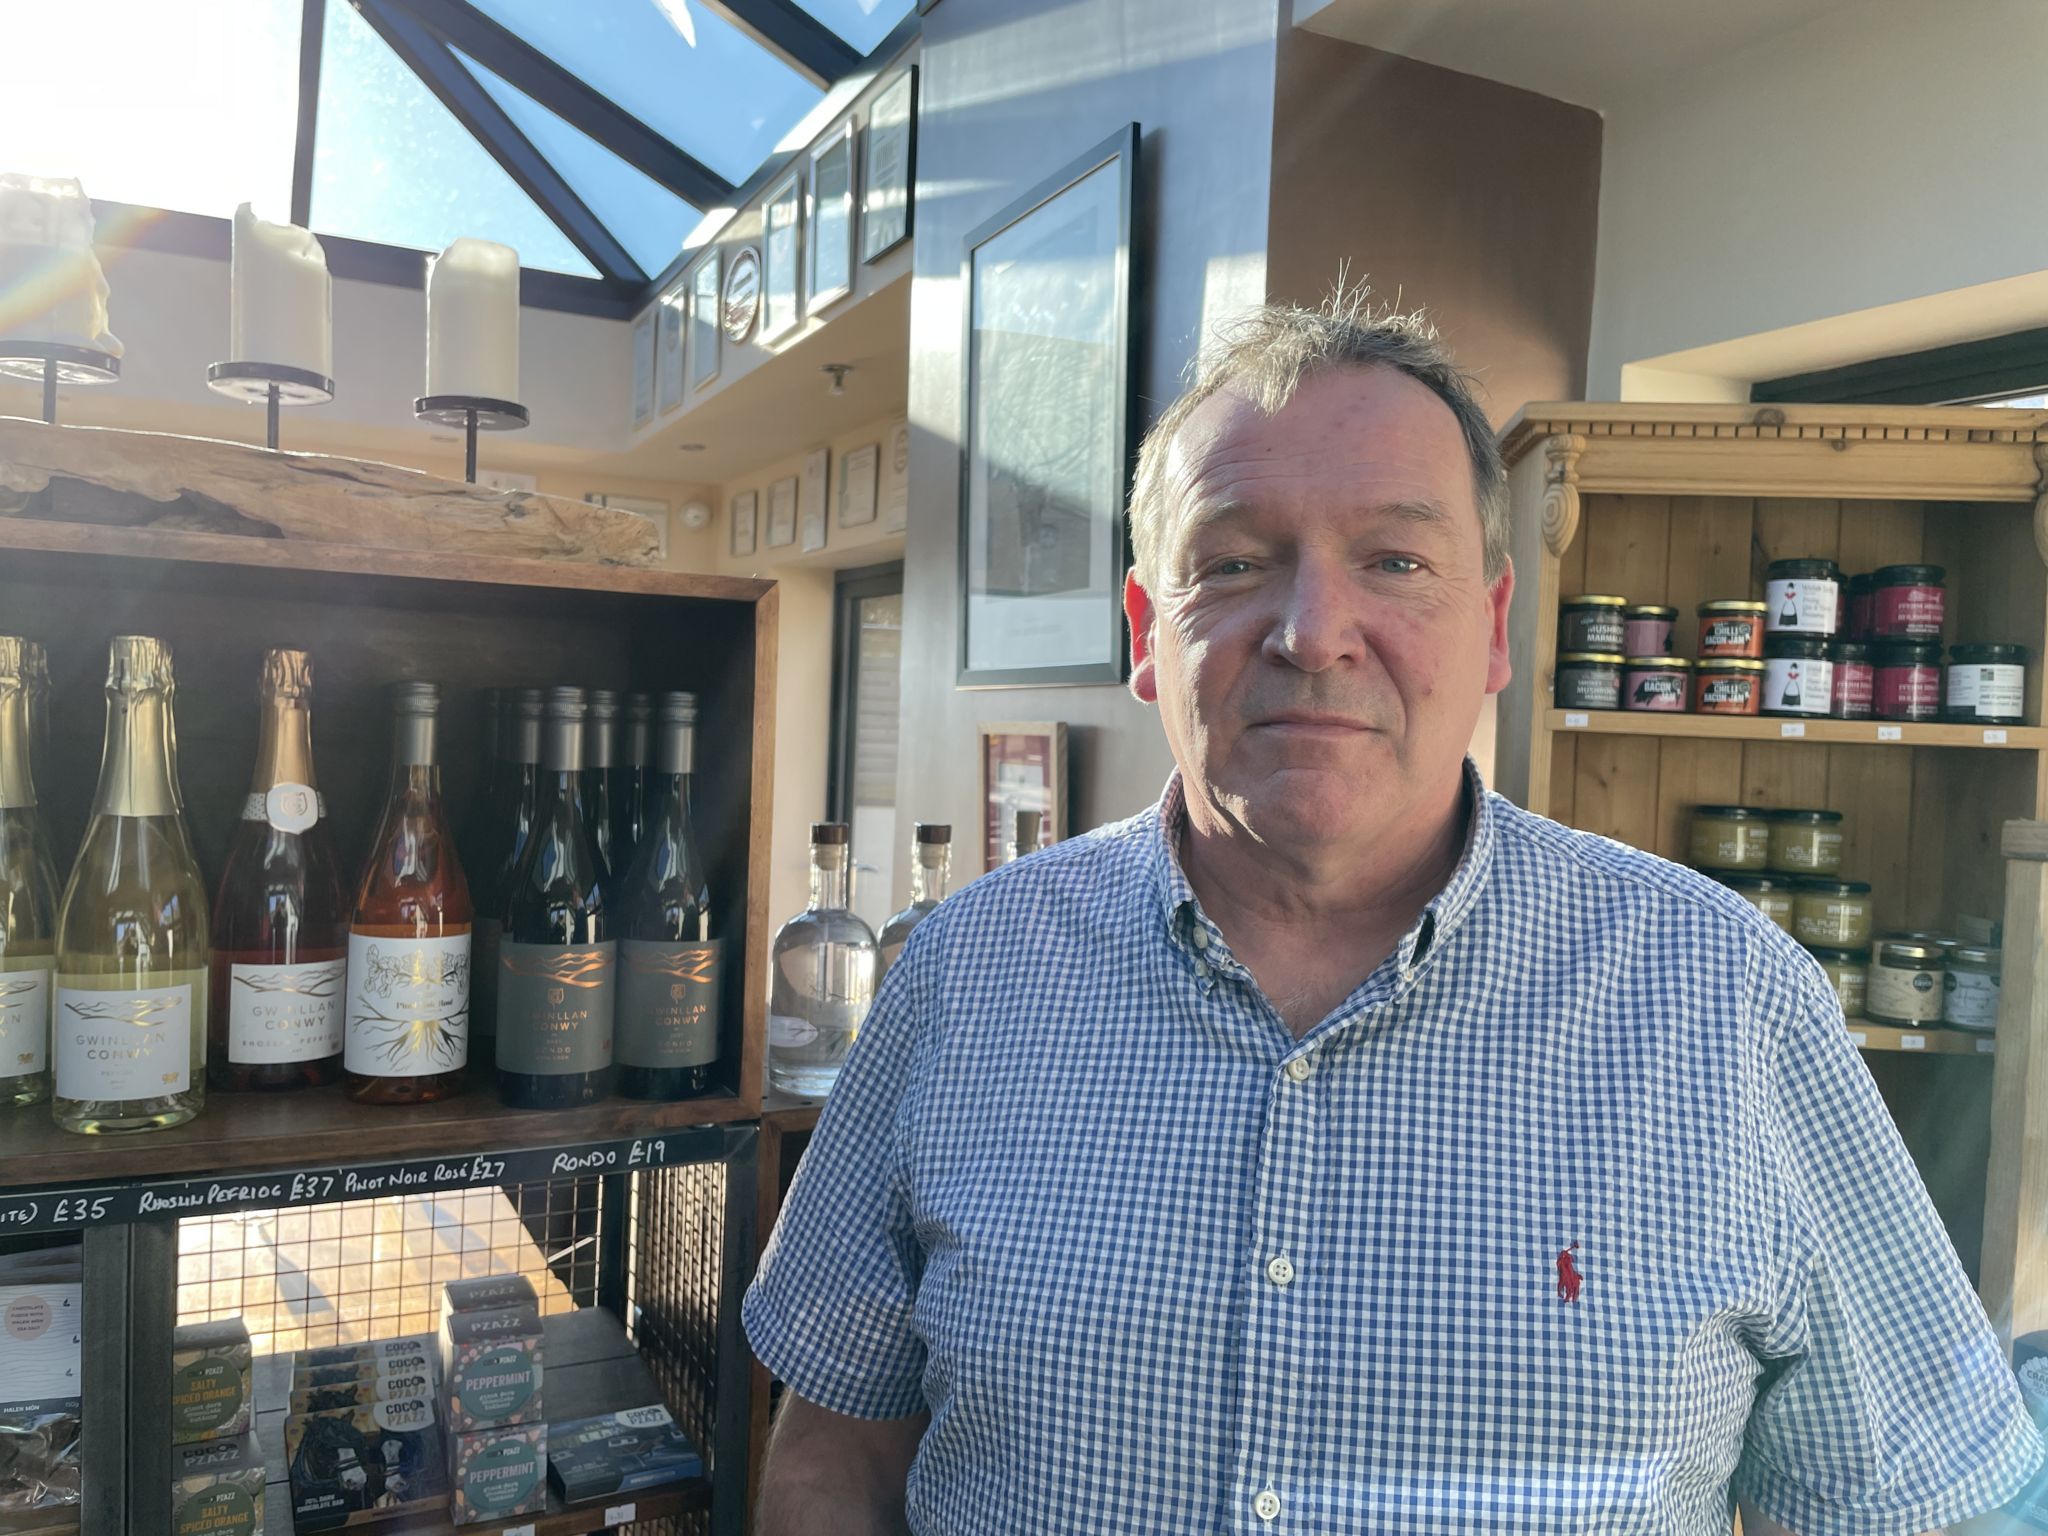 Colin Bennett, owner of Gwinllan Conwy Vineyard, in his vineyard shop